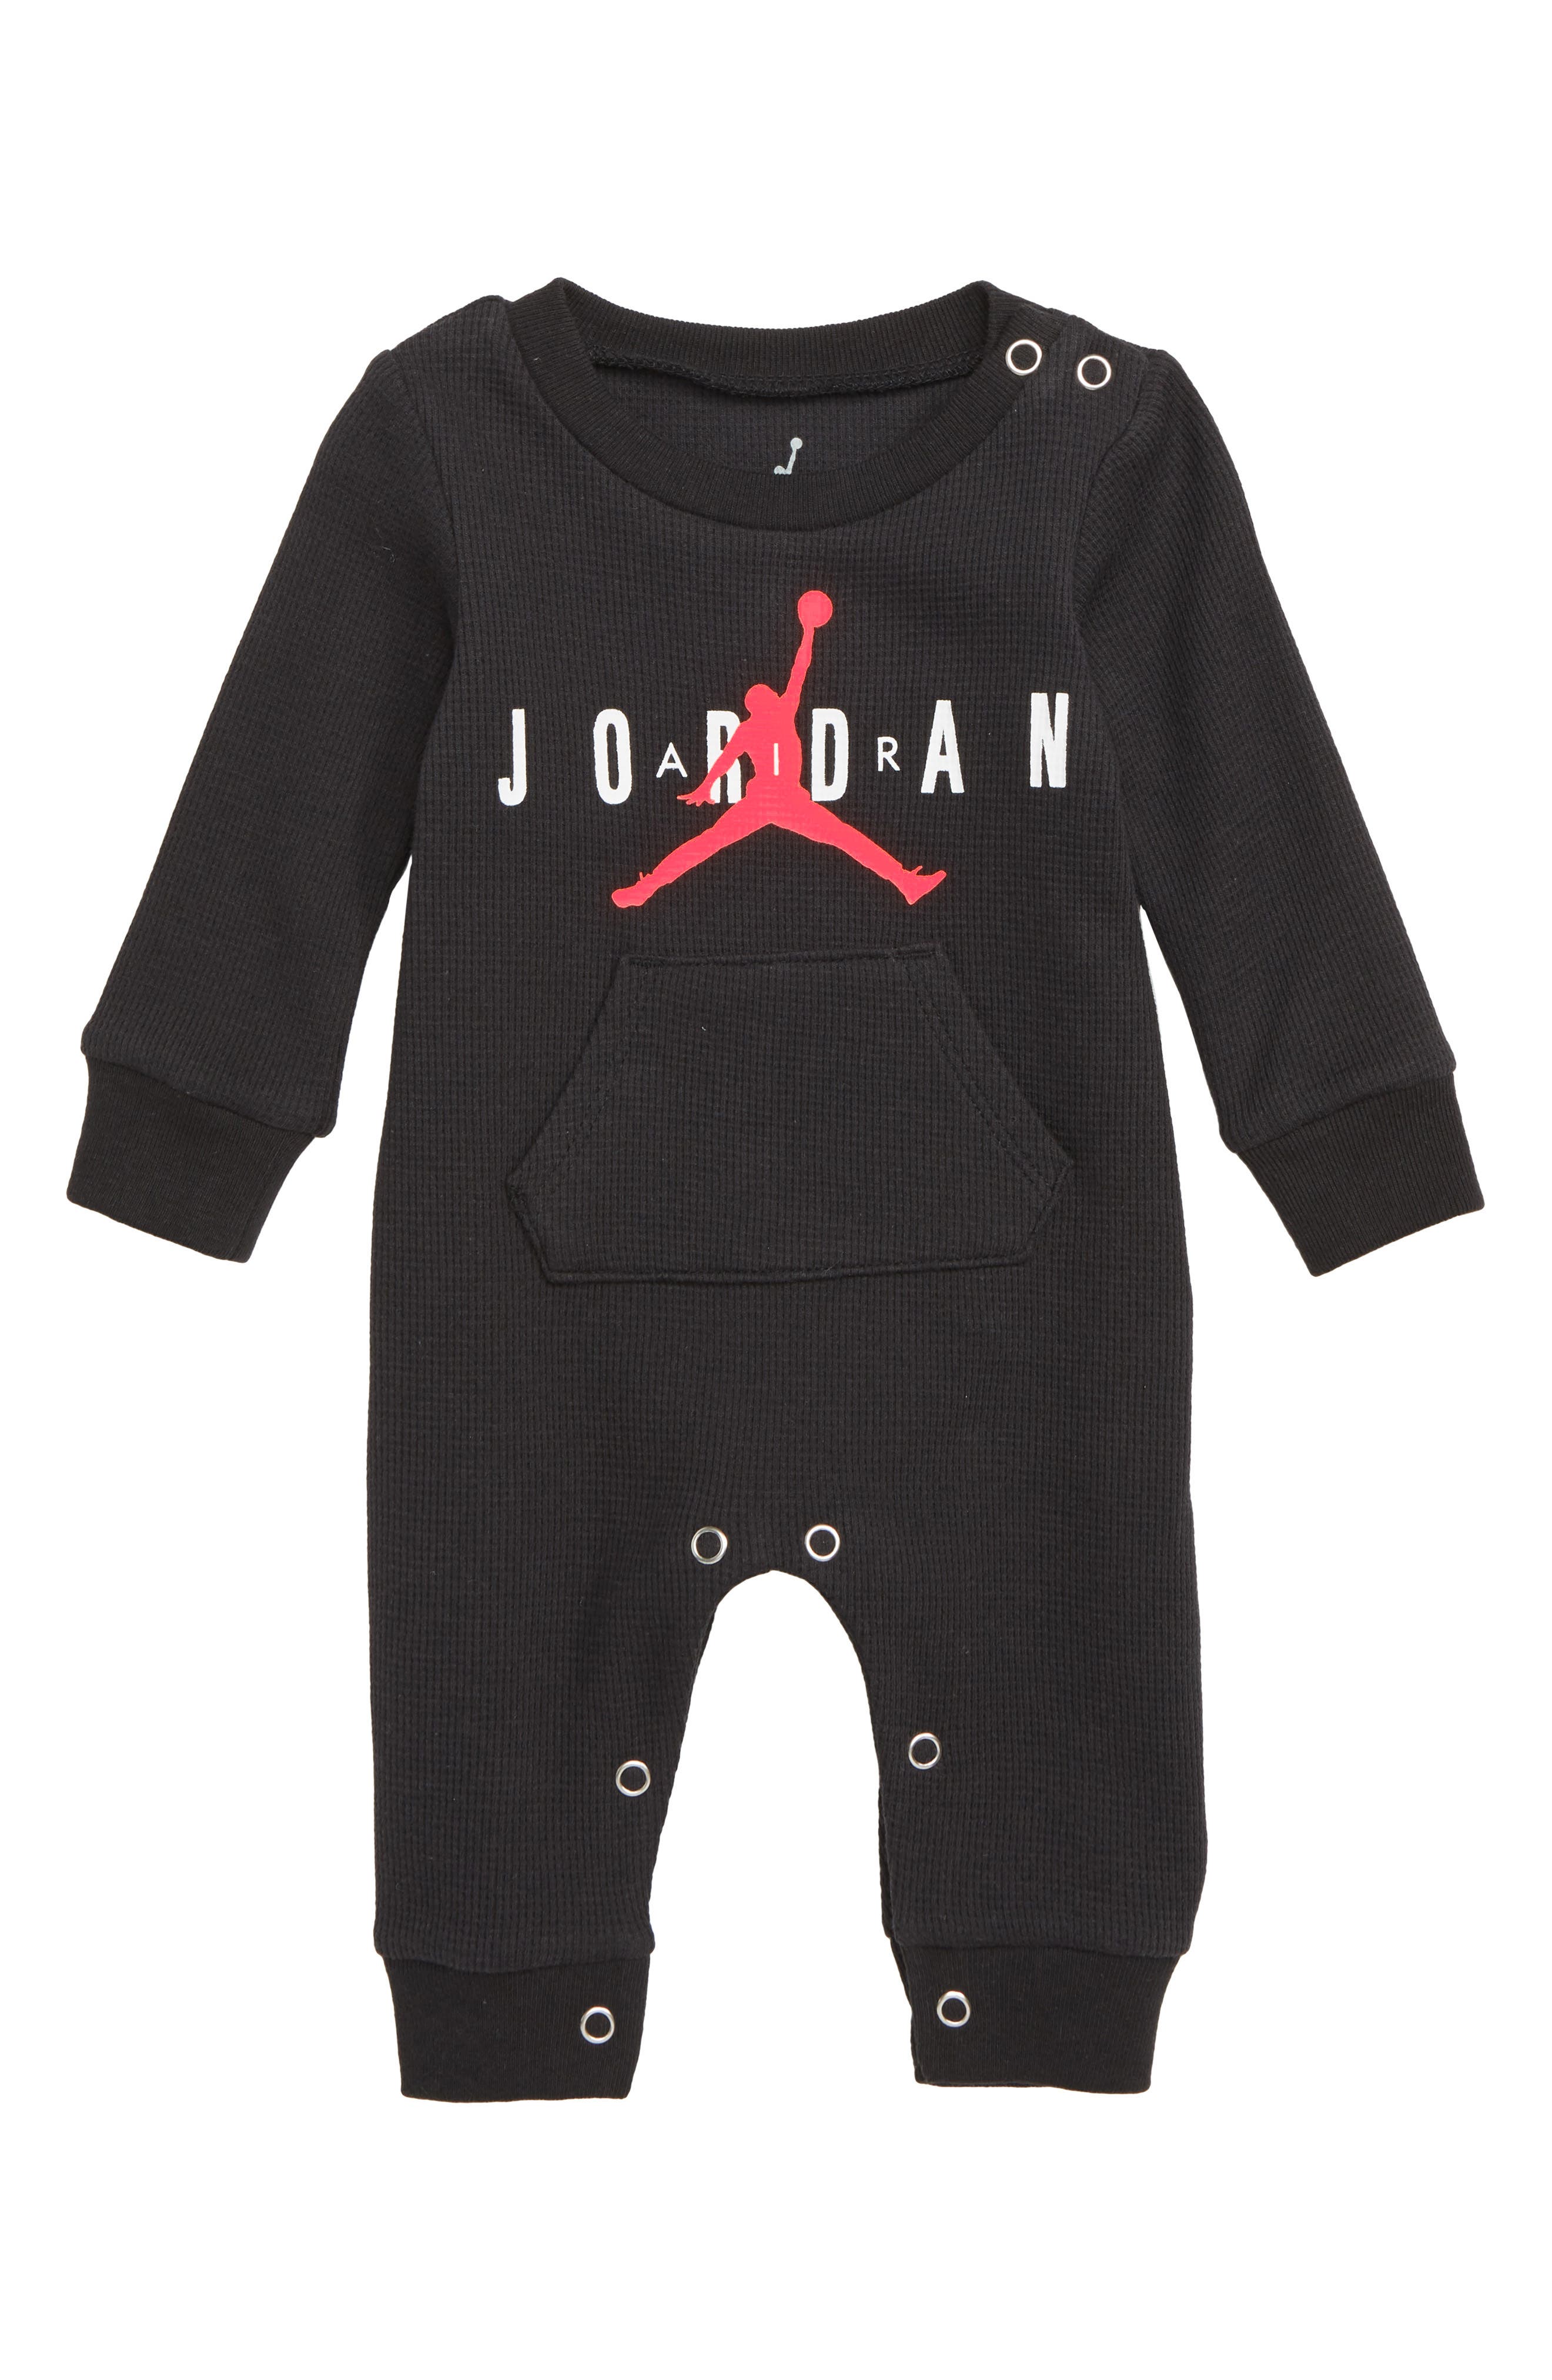 nike jordan baby clothes 